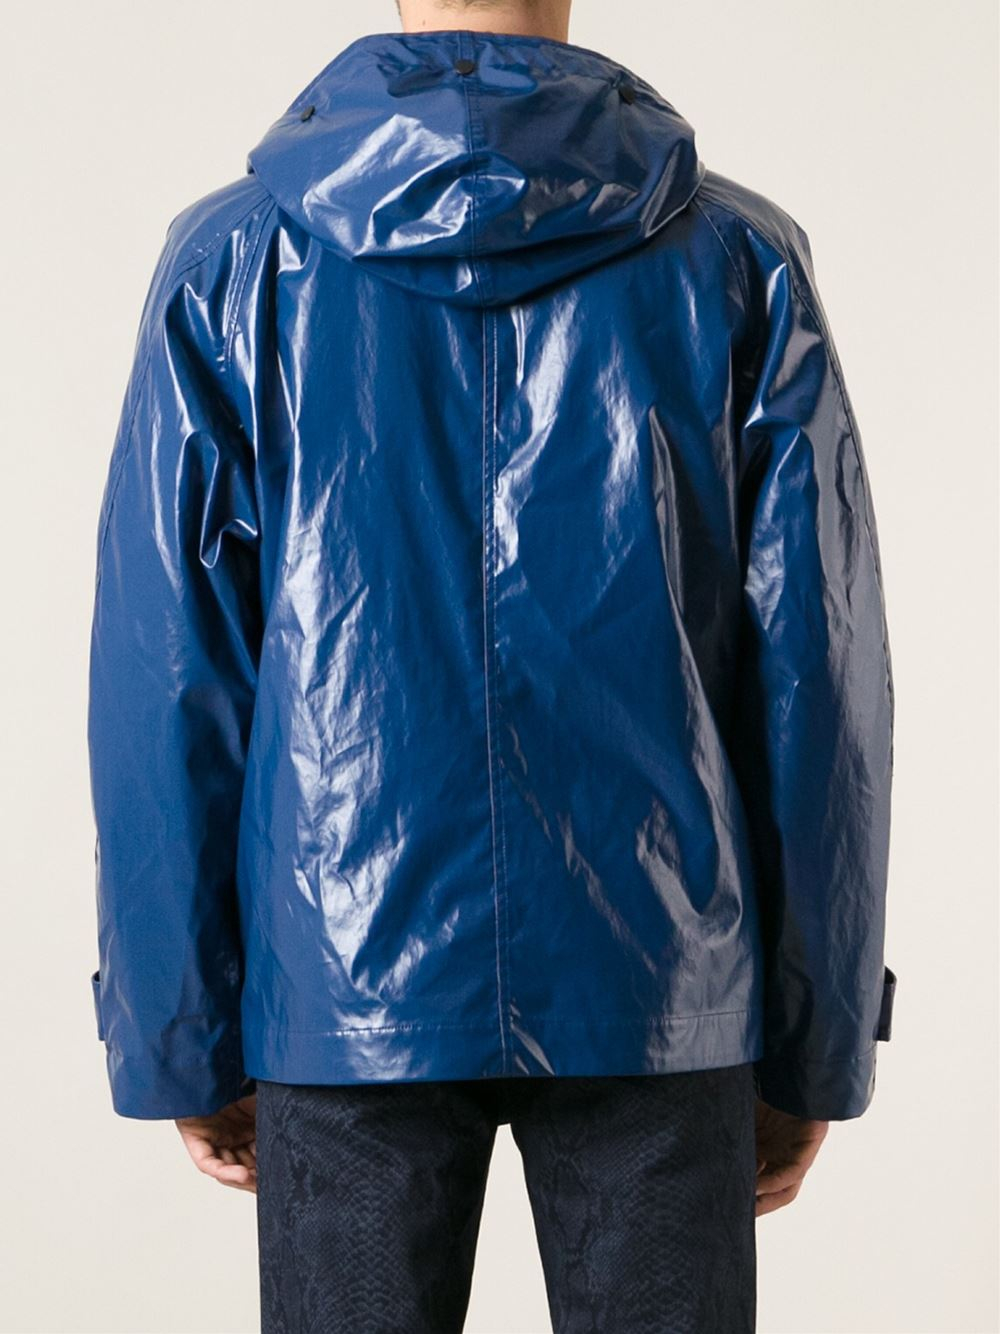 Lyst - Christopher Kane Hooded Windbreaker Jacket in Blue for Men